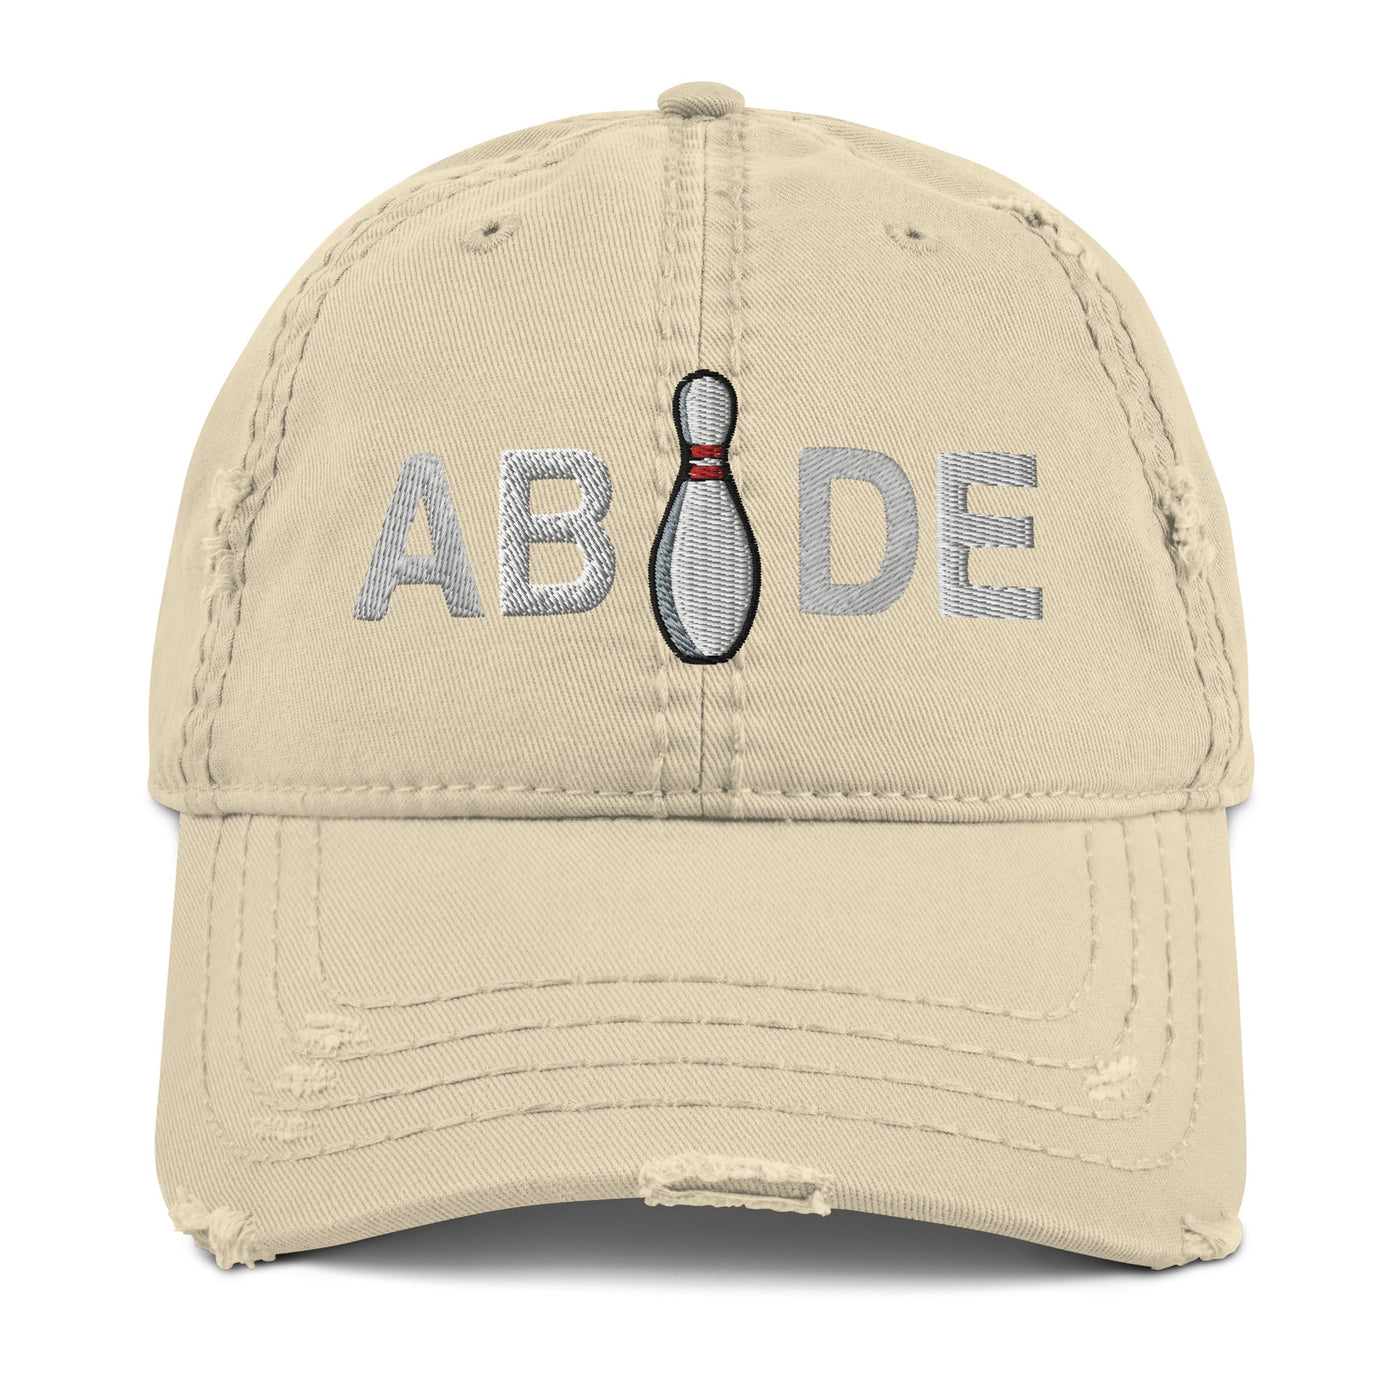 Abide Bowling Pin | Lebowski Distressed Dad Hat